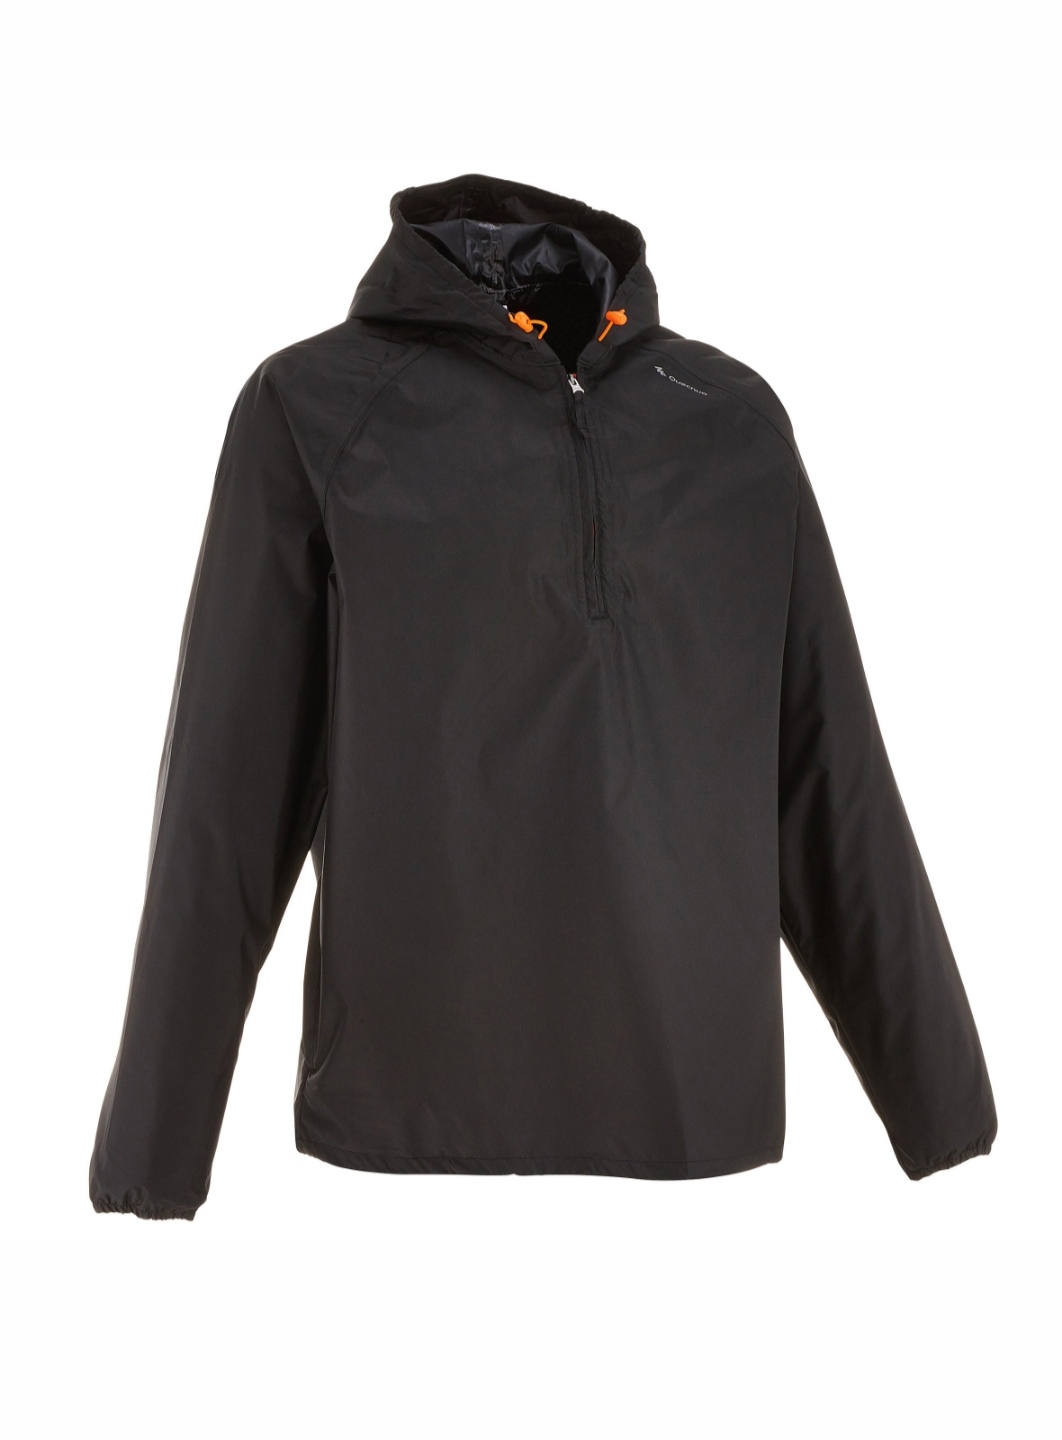 Buy Men's Raincoat NH 100-Black Quechua by Decathlon Online @ ₹1240 ...